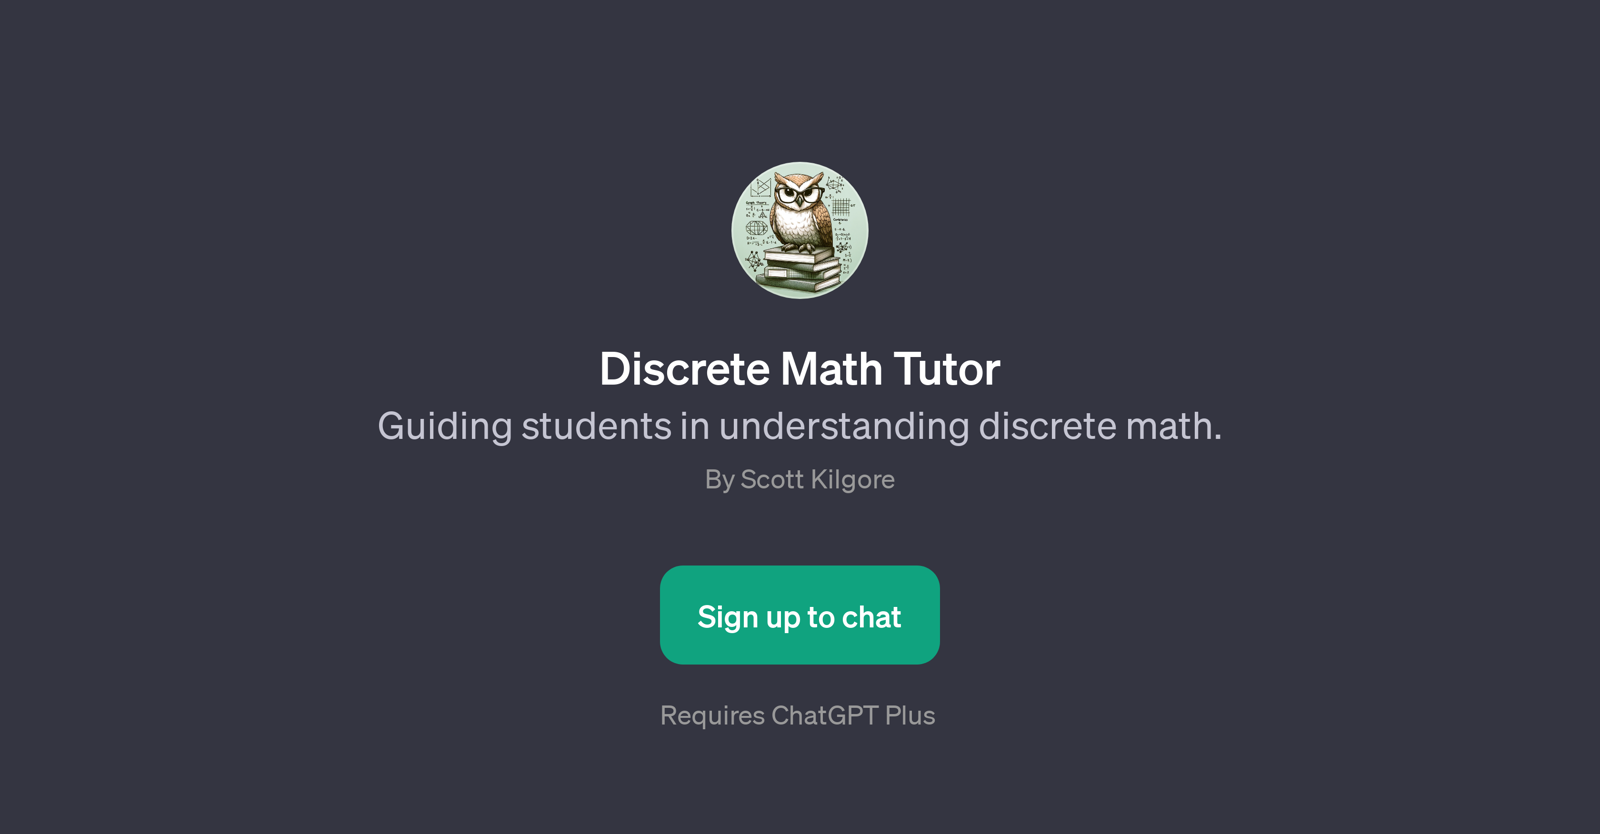 Discrete Math Tutor website